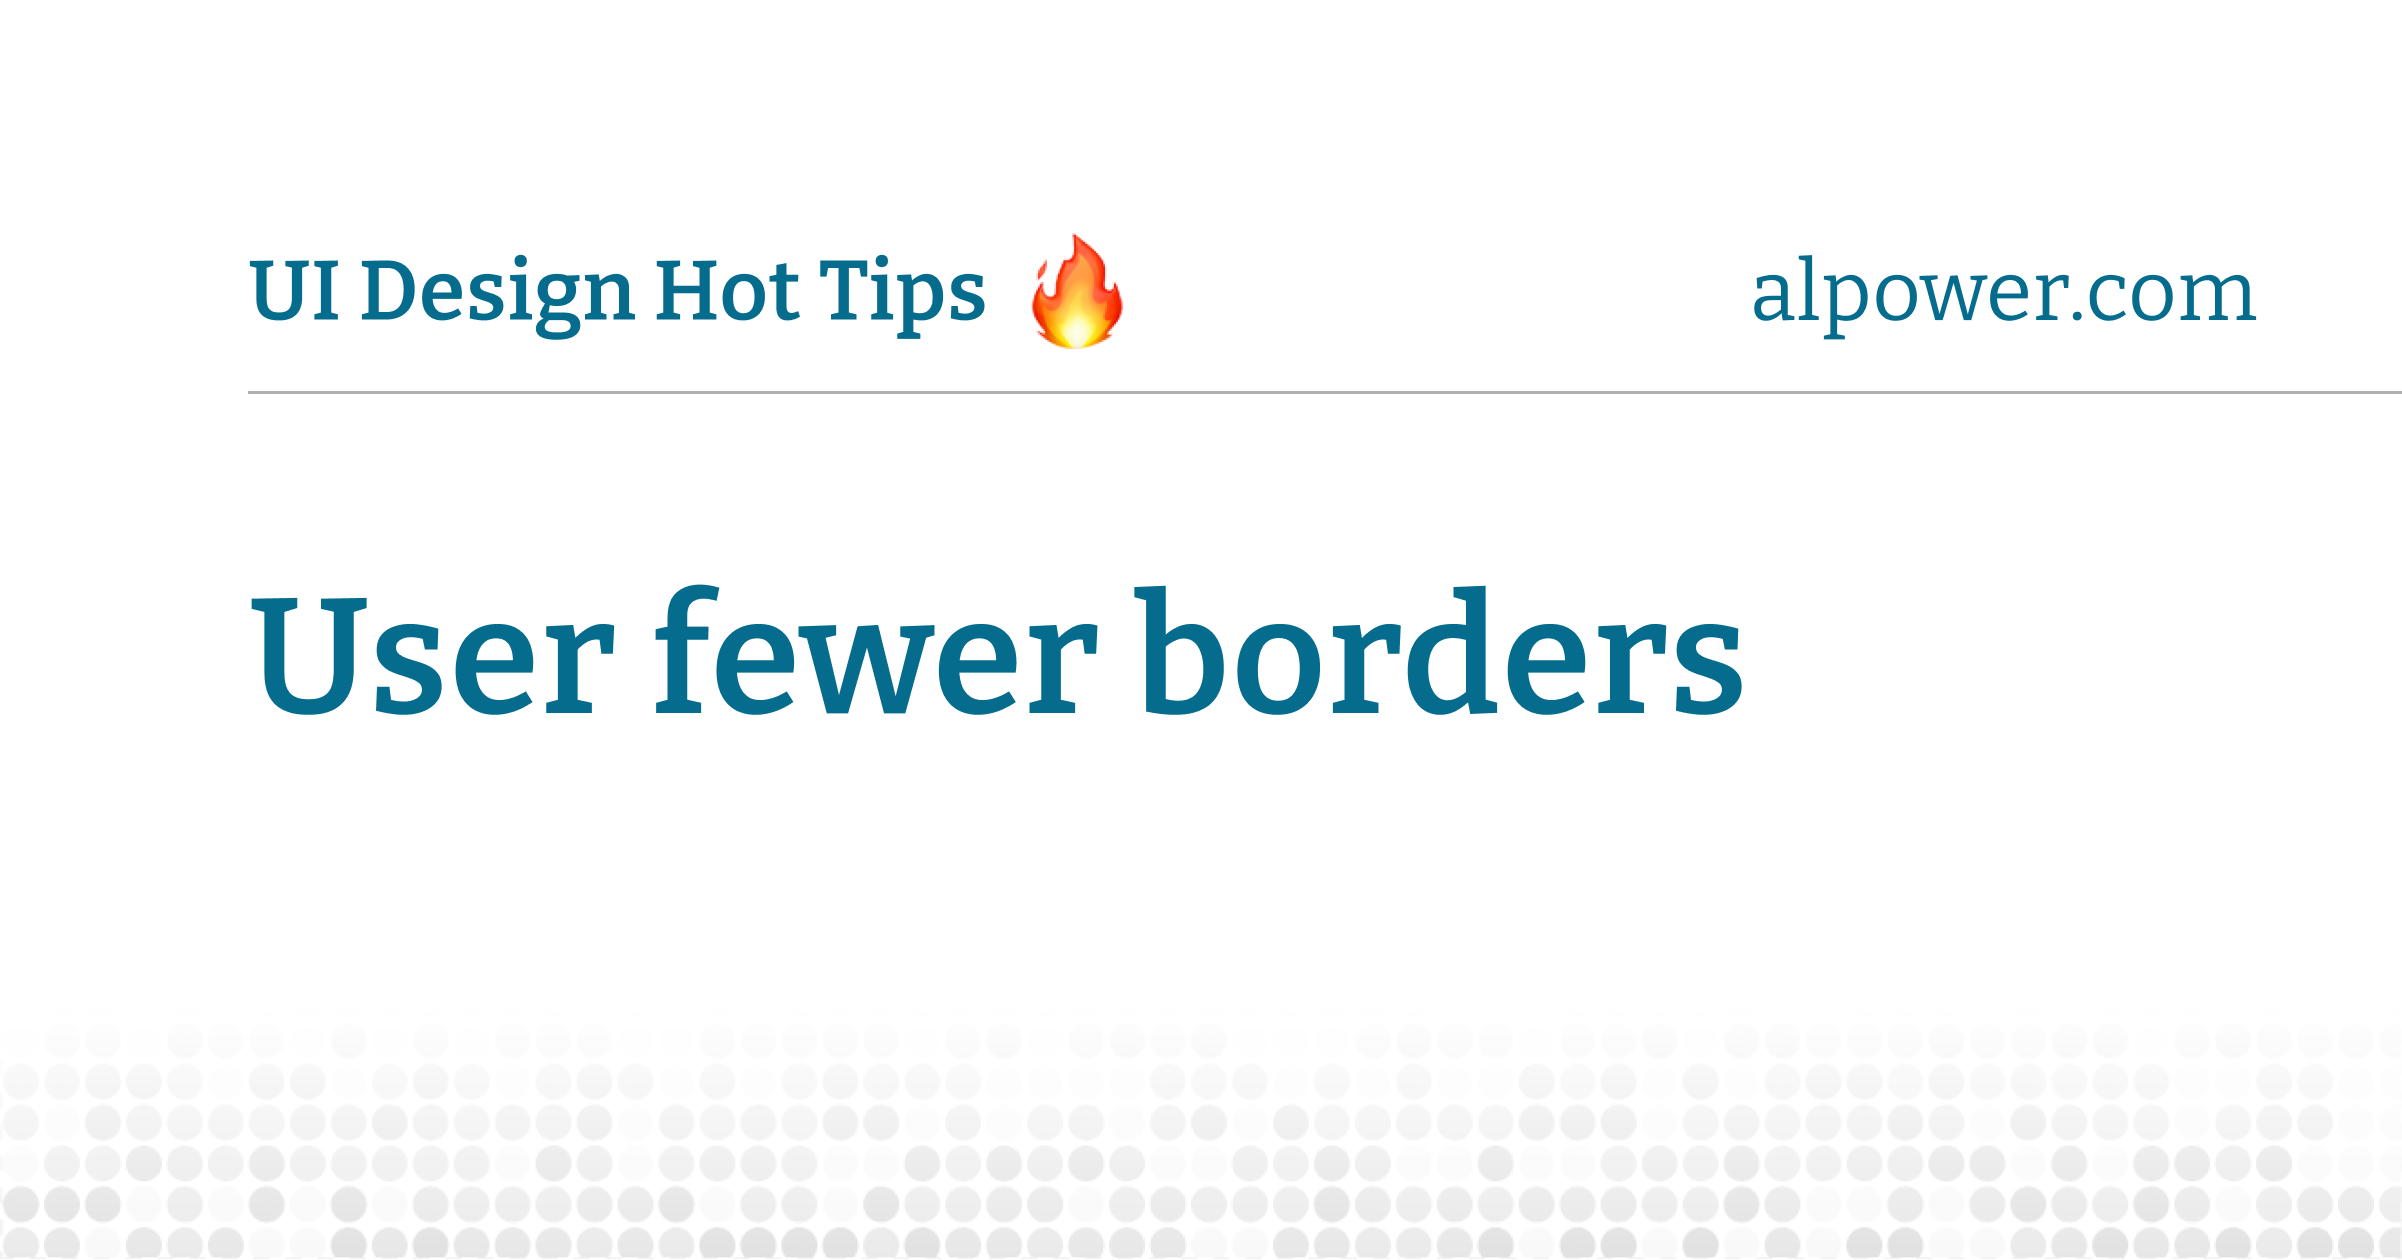 Use fewer borders